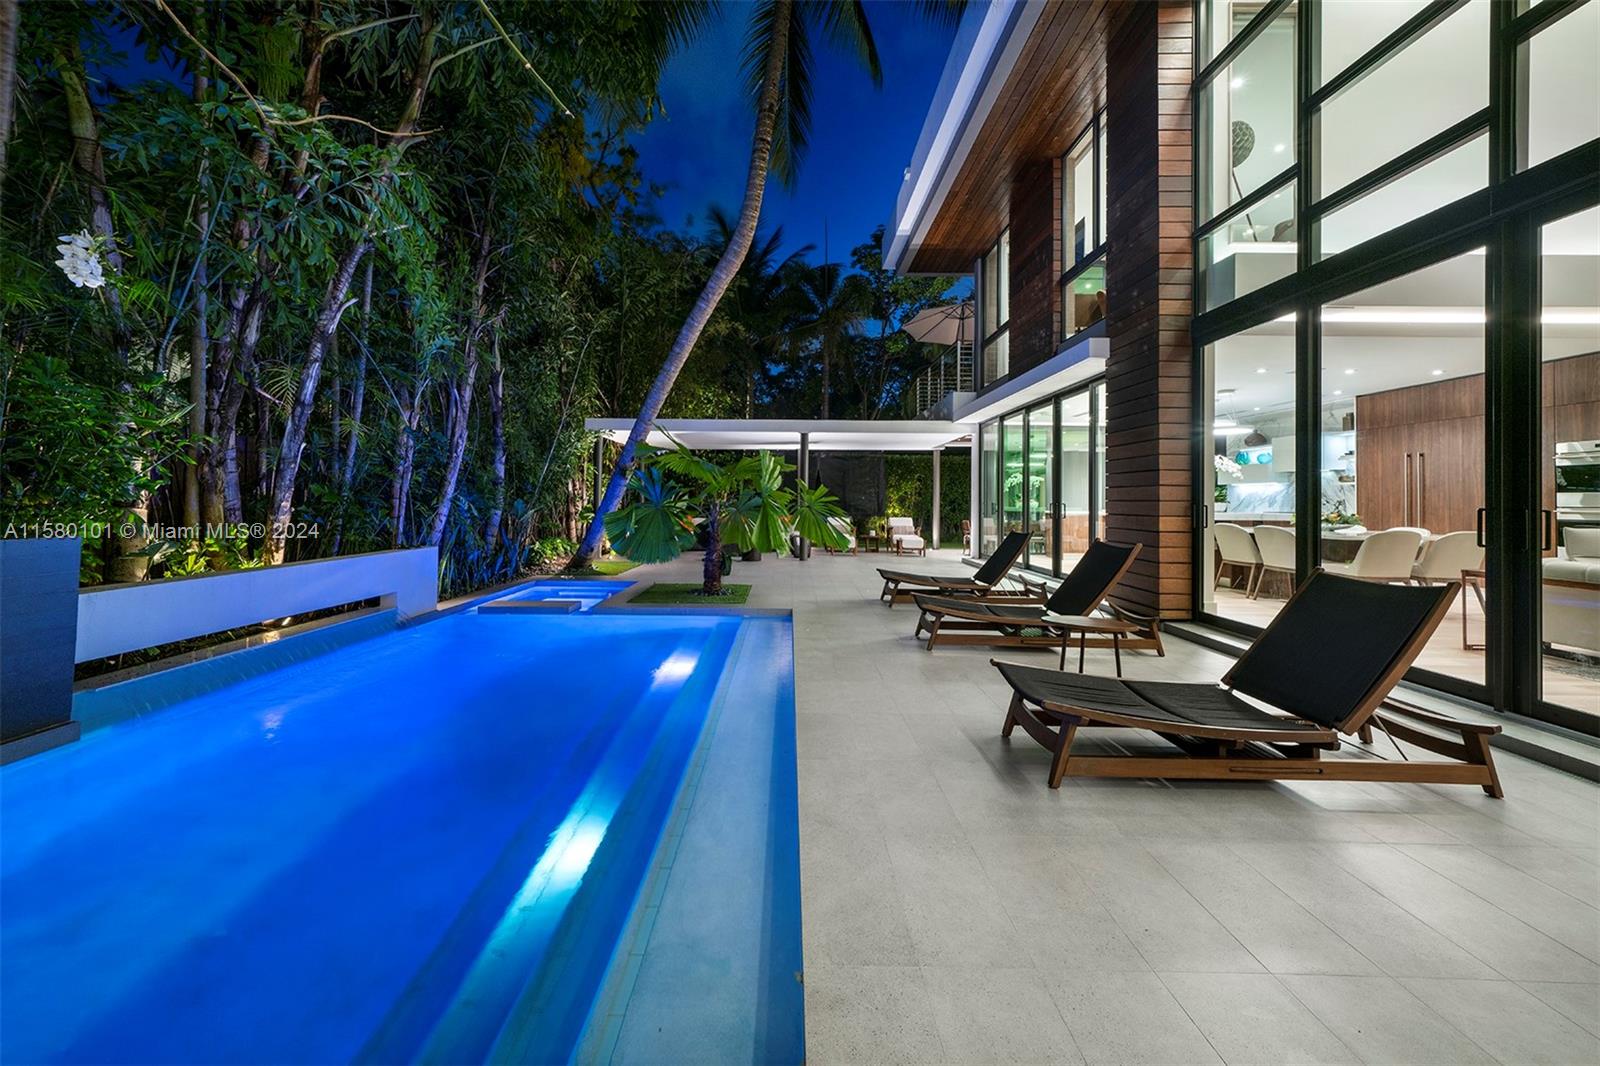 Property for Sale at 3230 Crystal Ct, Miami, Broward County, Florida - Bedrooms: 7 
Bathrooms: 8.5  - $10,500,000